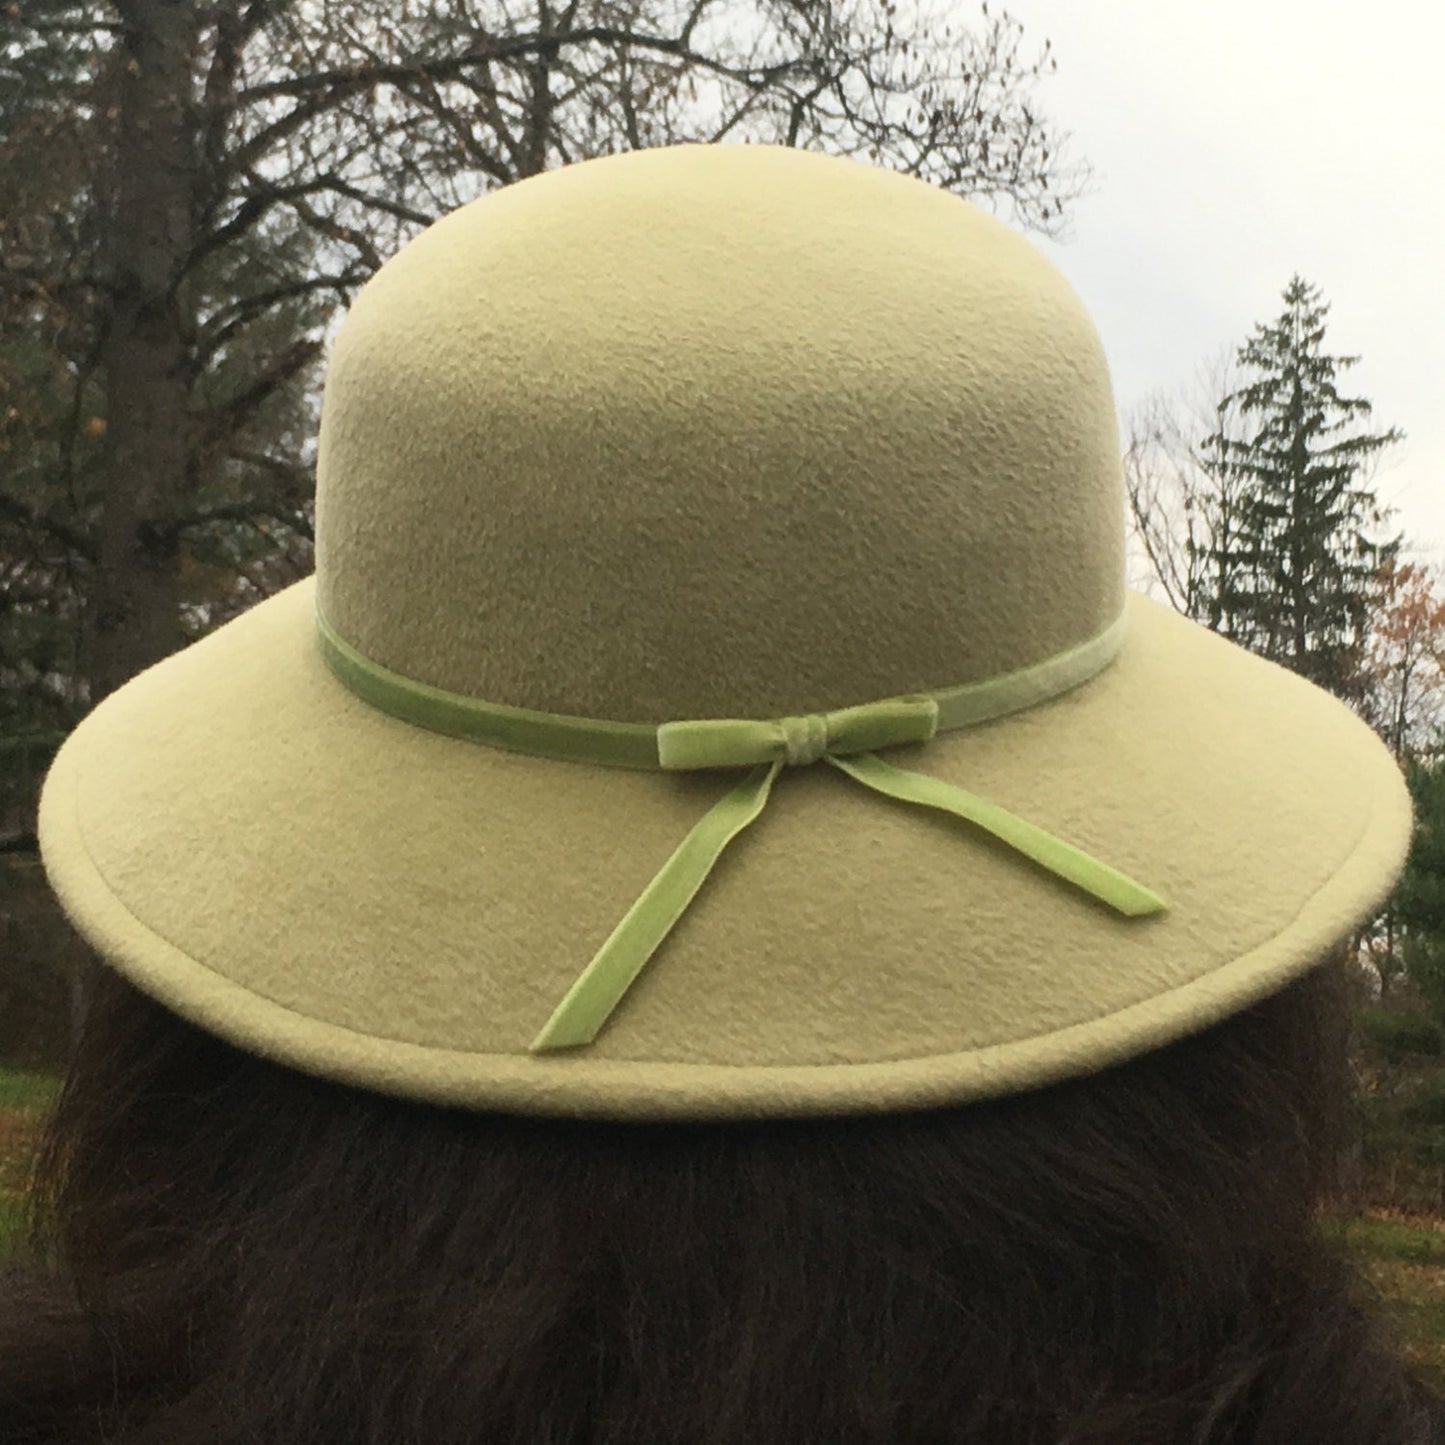 Soft Celery Green Velour Wool Felt Hat with Brim! Simple Velvet Ribbon Trim-Church Hat-Wedding Hat-Christmas Hat! 'Go To Hat' Comfy Hat